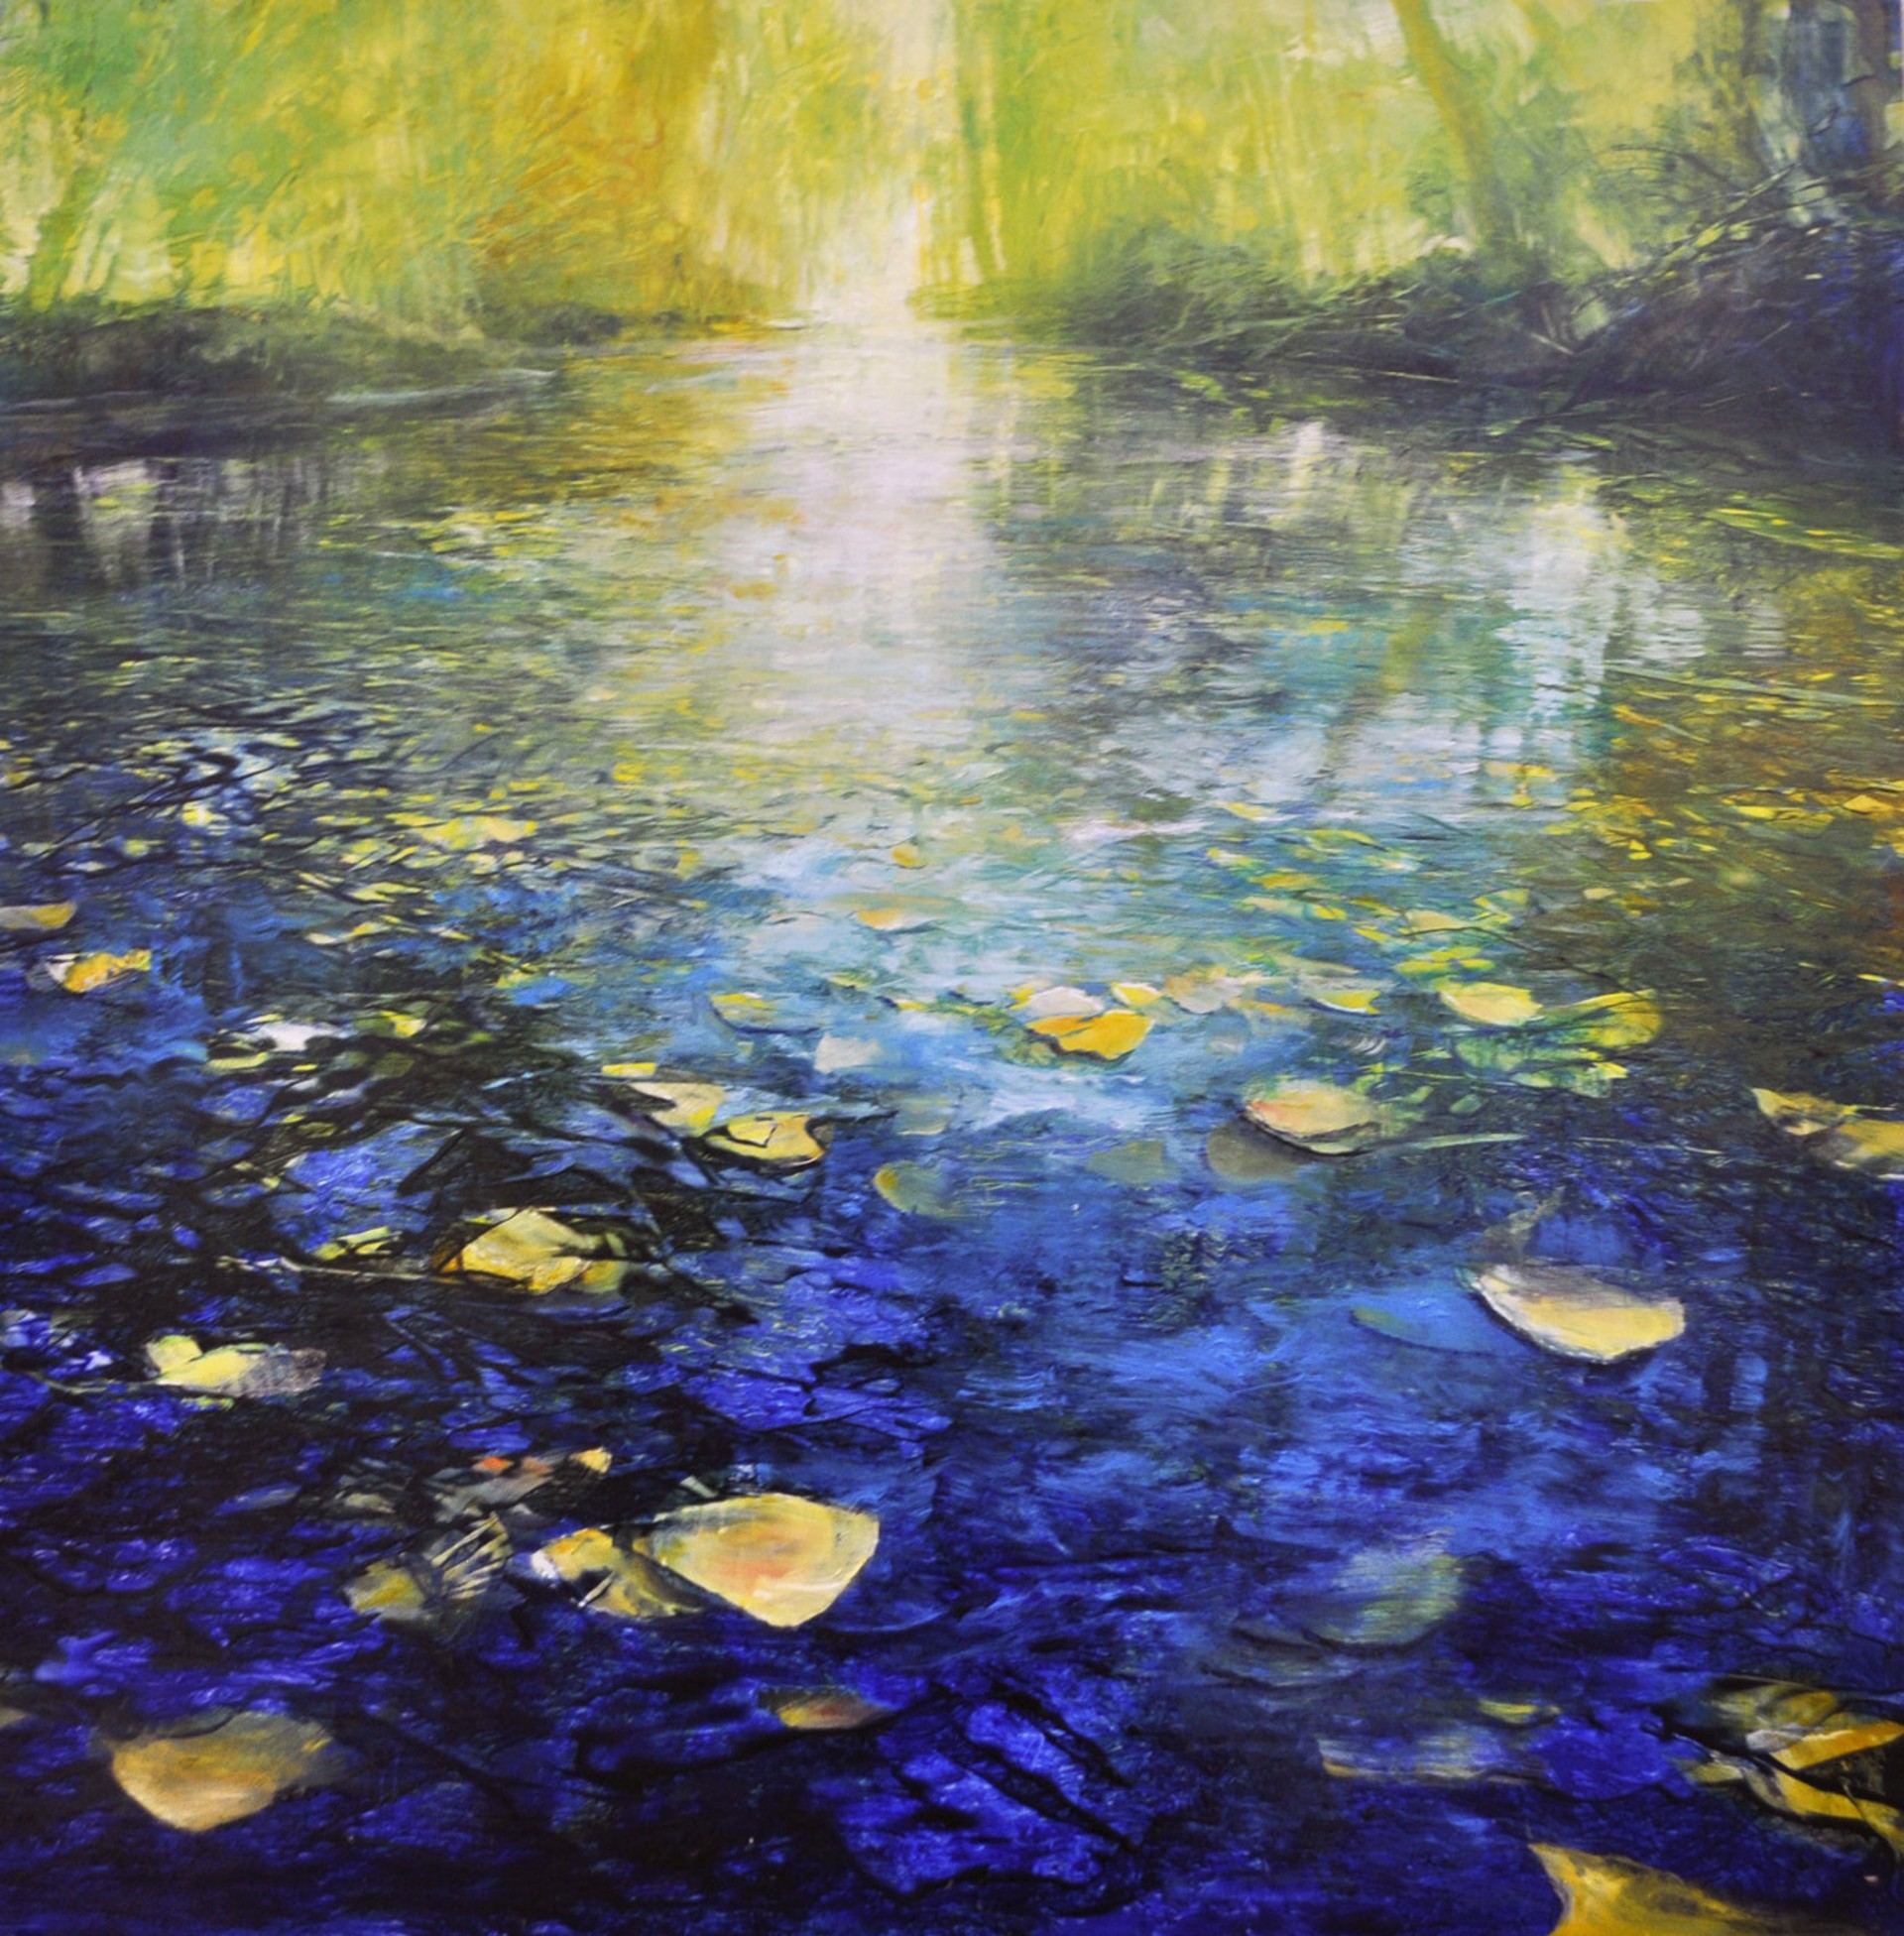 Serenade on Water by David Dunlop